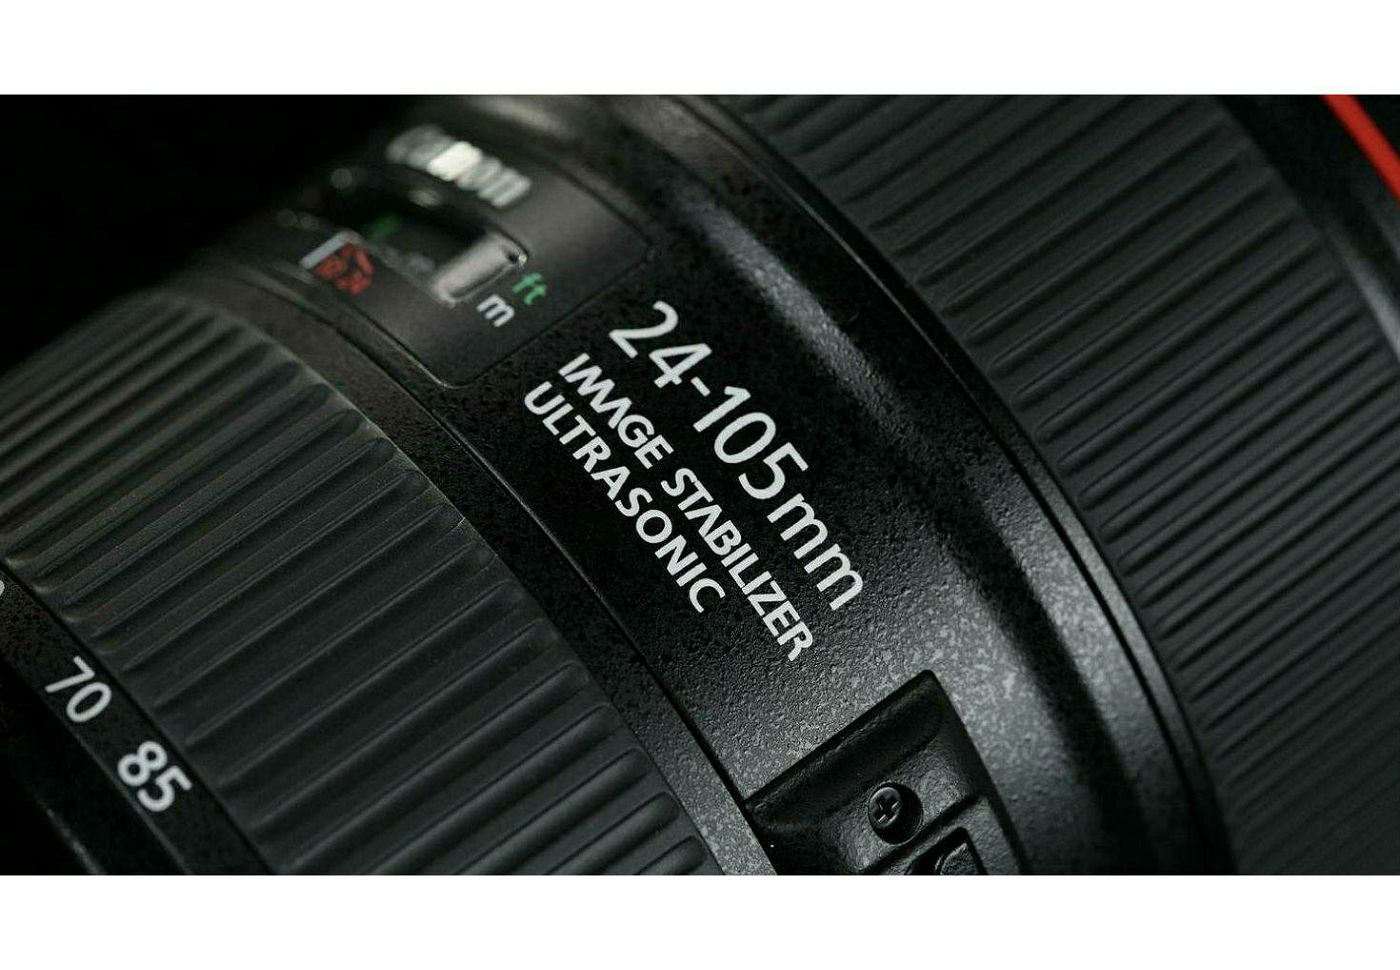 Canon EOS 5D Mark IV + 24-105 L IS II USM kit DSLR digitalni fotoaparat i objektiv Camera with 24-105mm f/4L II Lens (1483C028AA) - CASH BACK